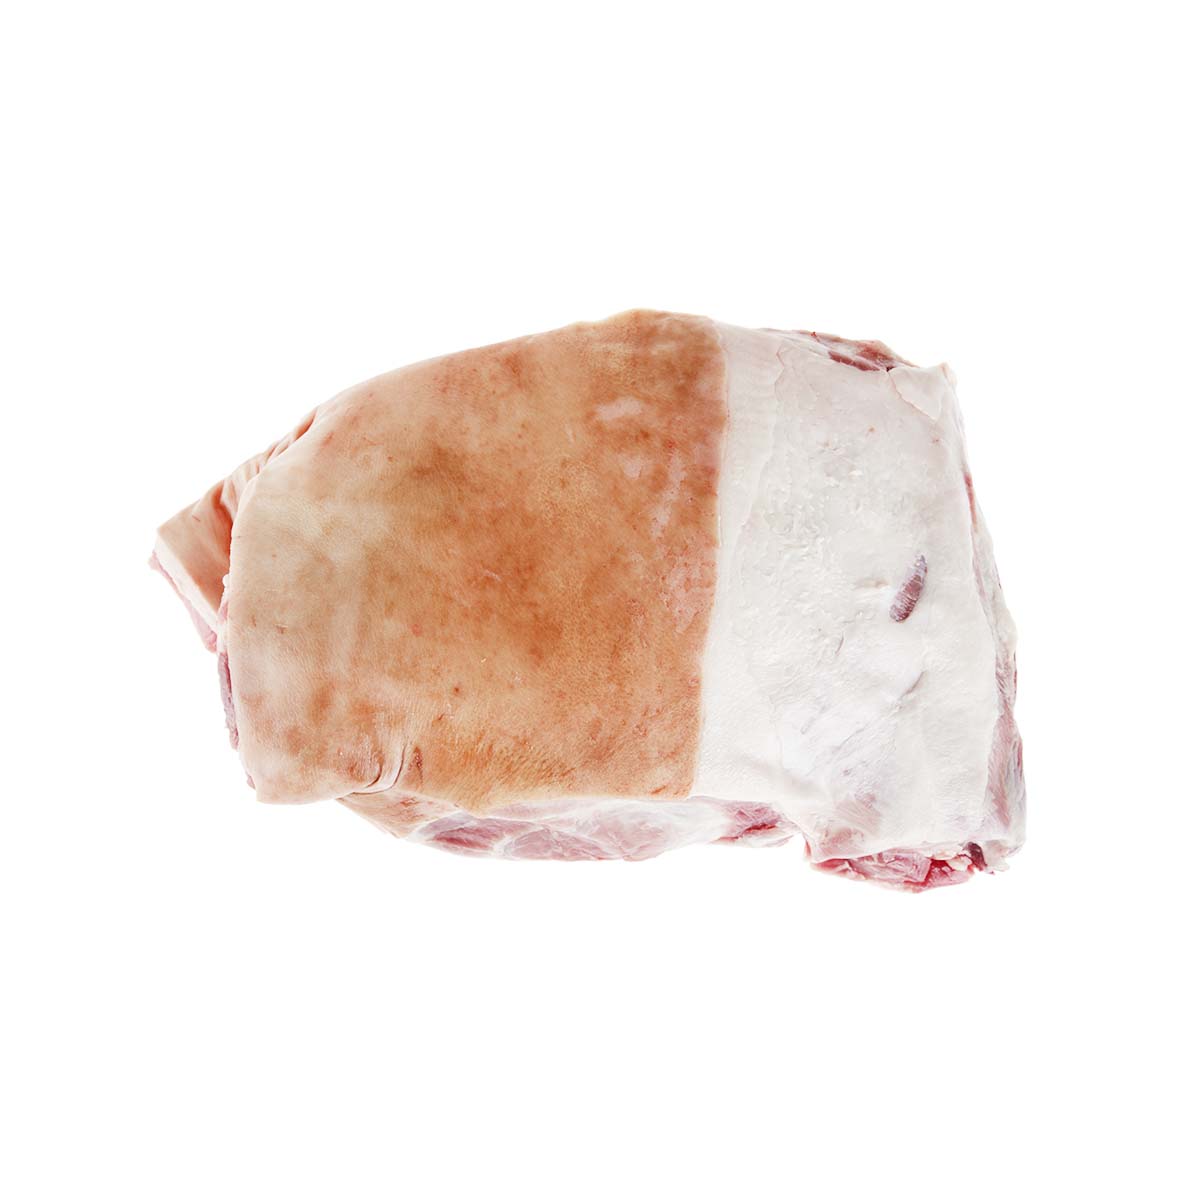 Les Viandes Du Breton Boneless Pork Butts